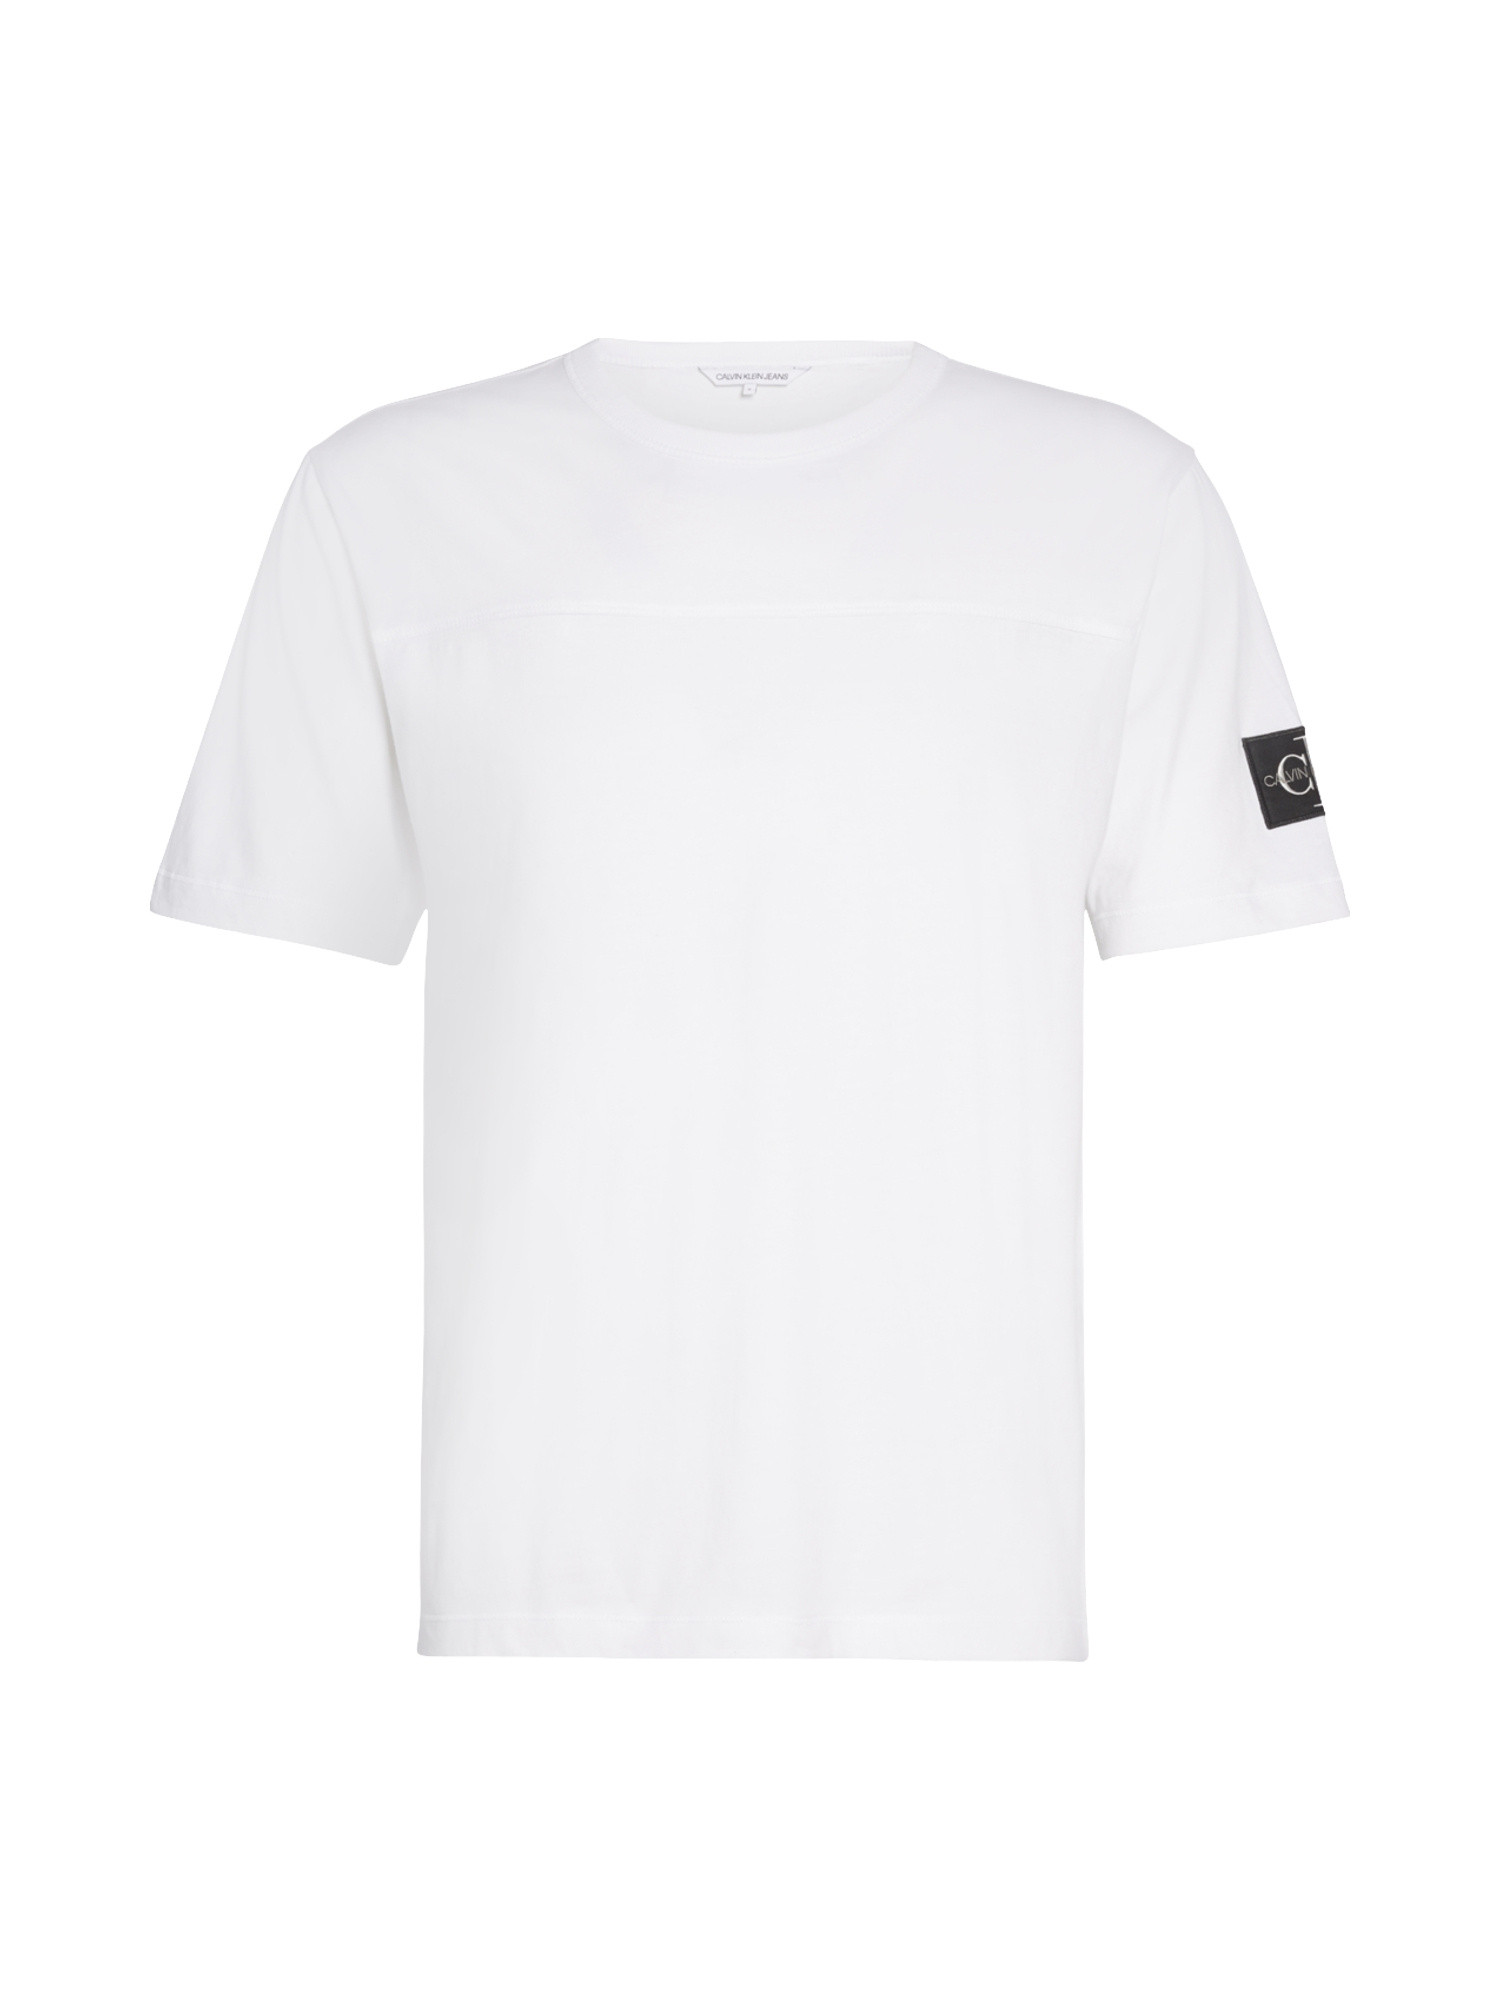 T-shirt con logo, Bianco, large image number 0